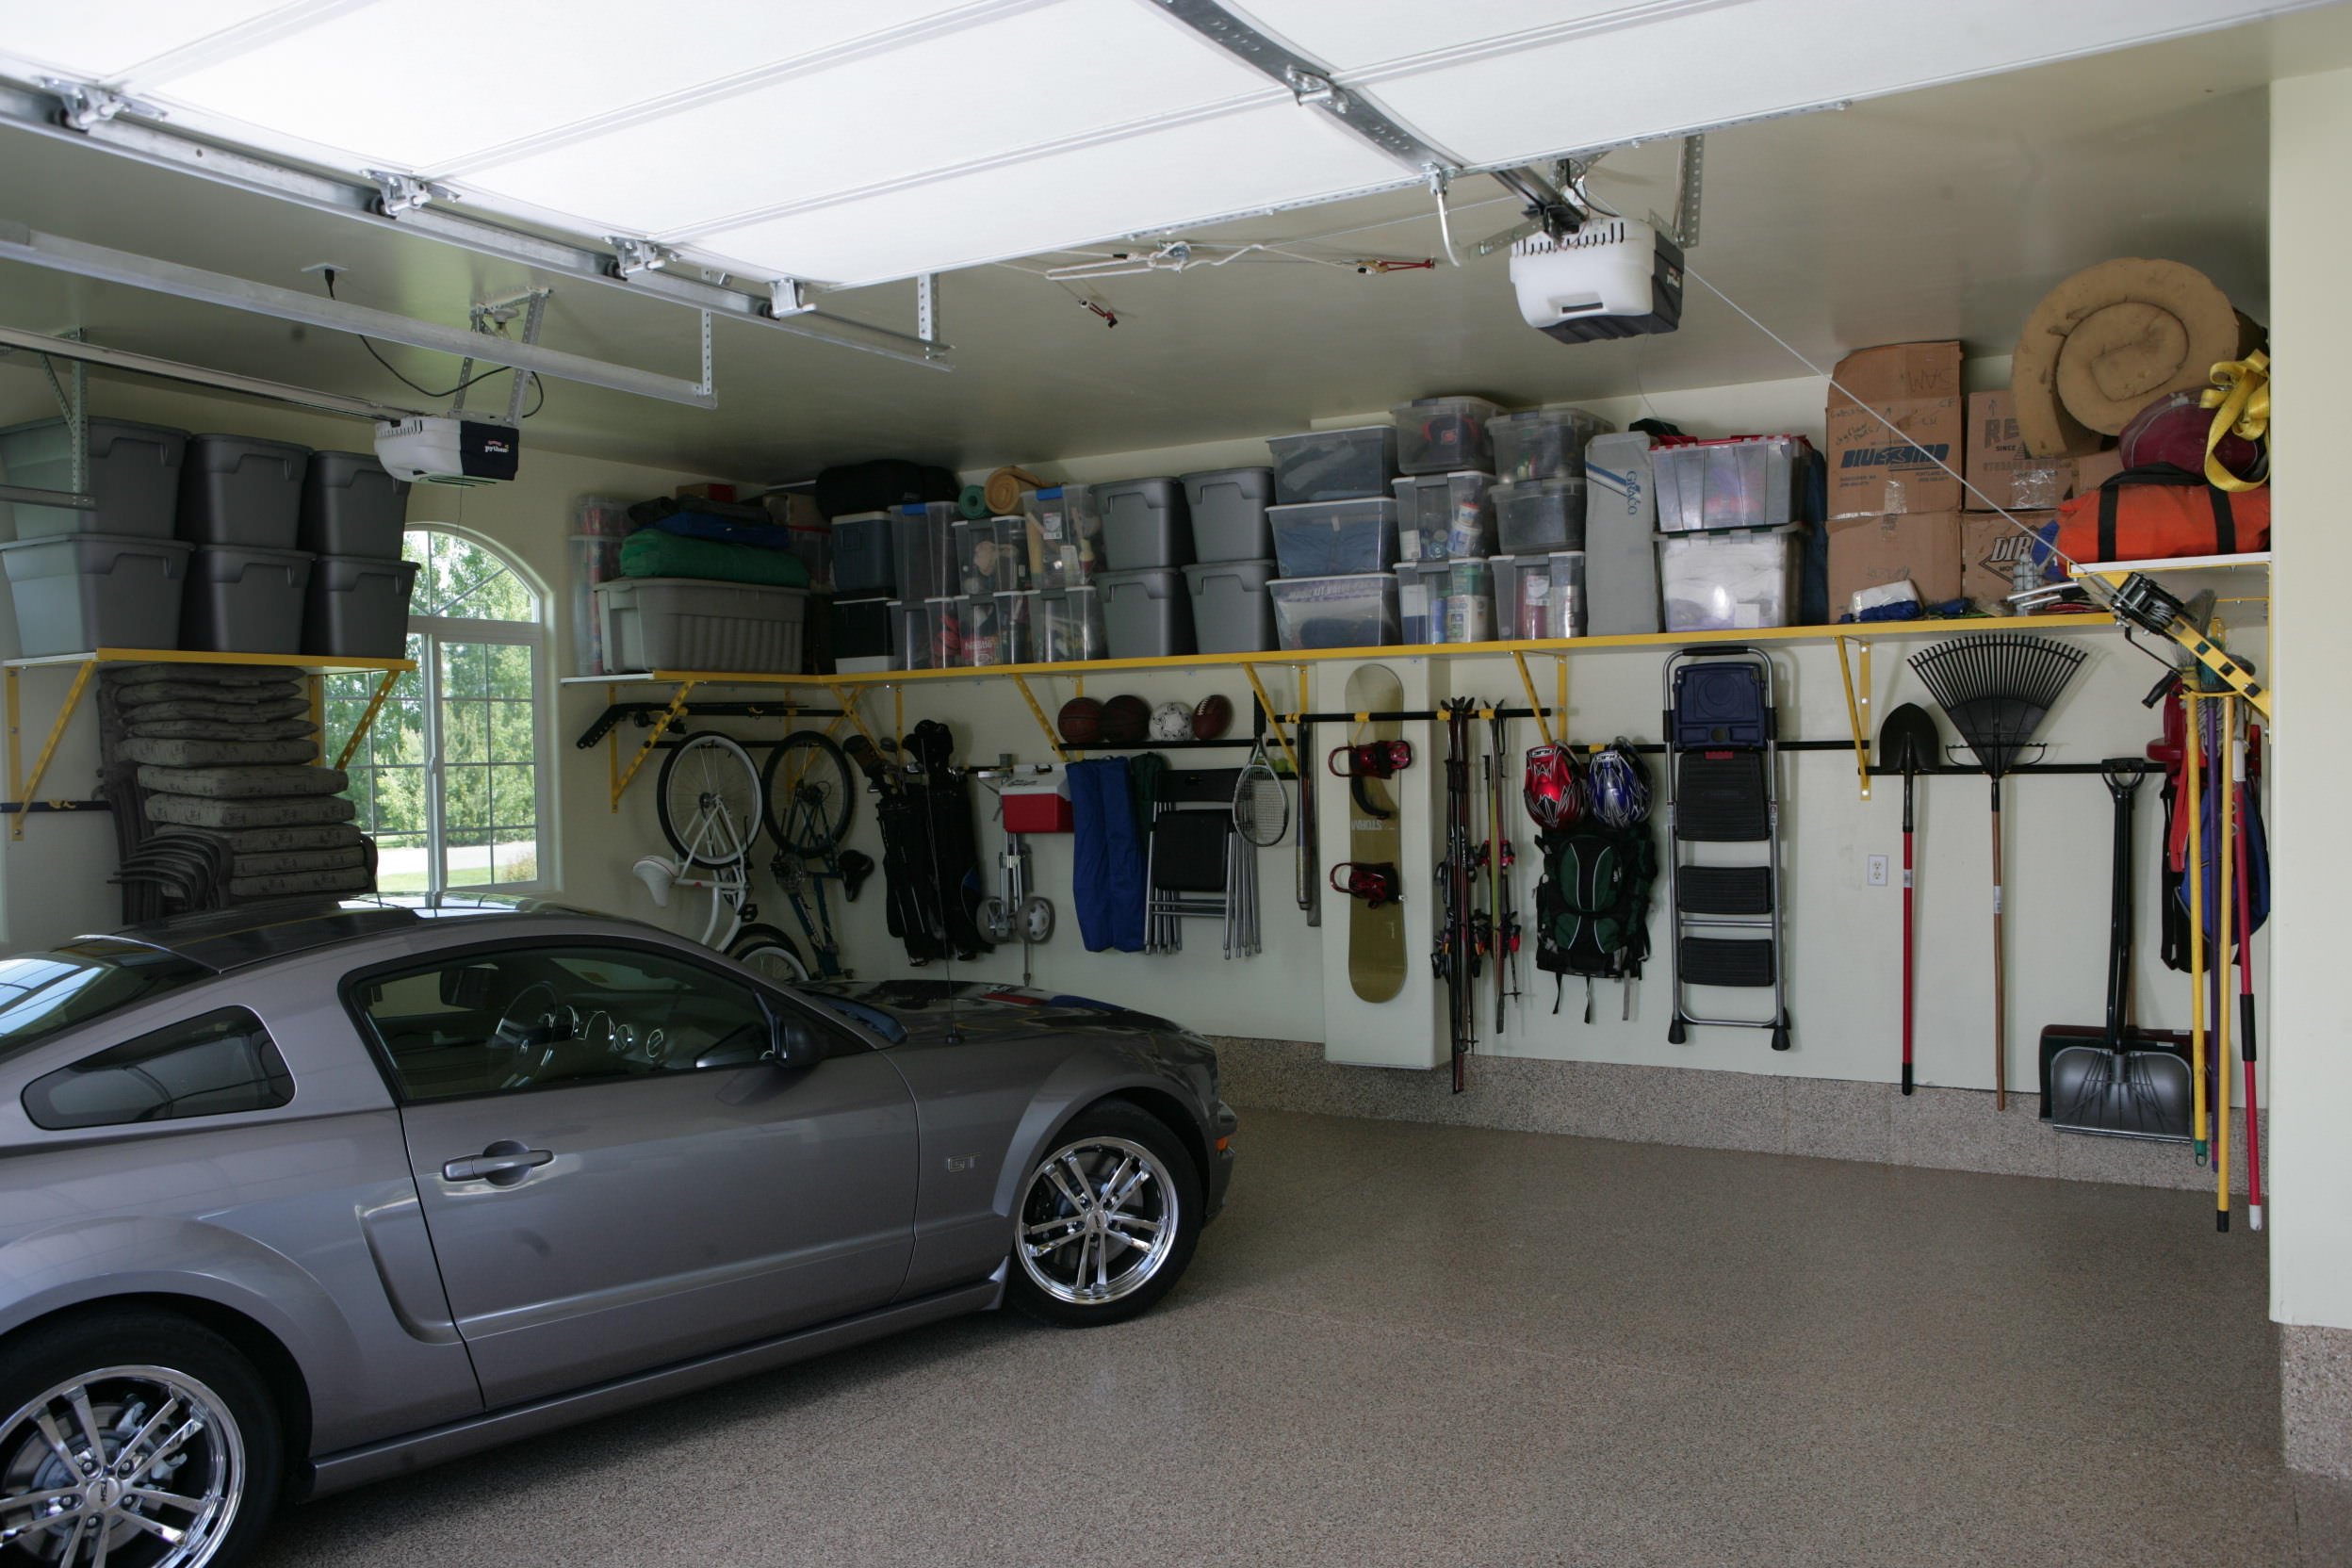 Сток гараж. Обустройство гаража. Гараж внутри. Удобный гараж. Современный гараж внутри.